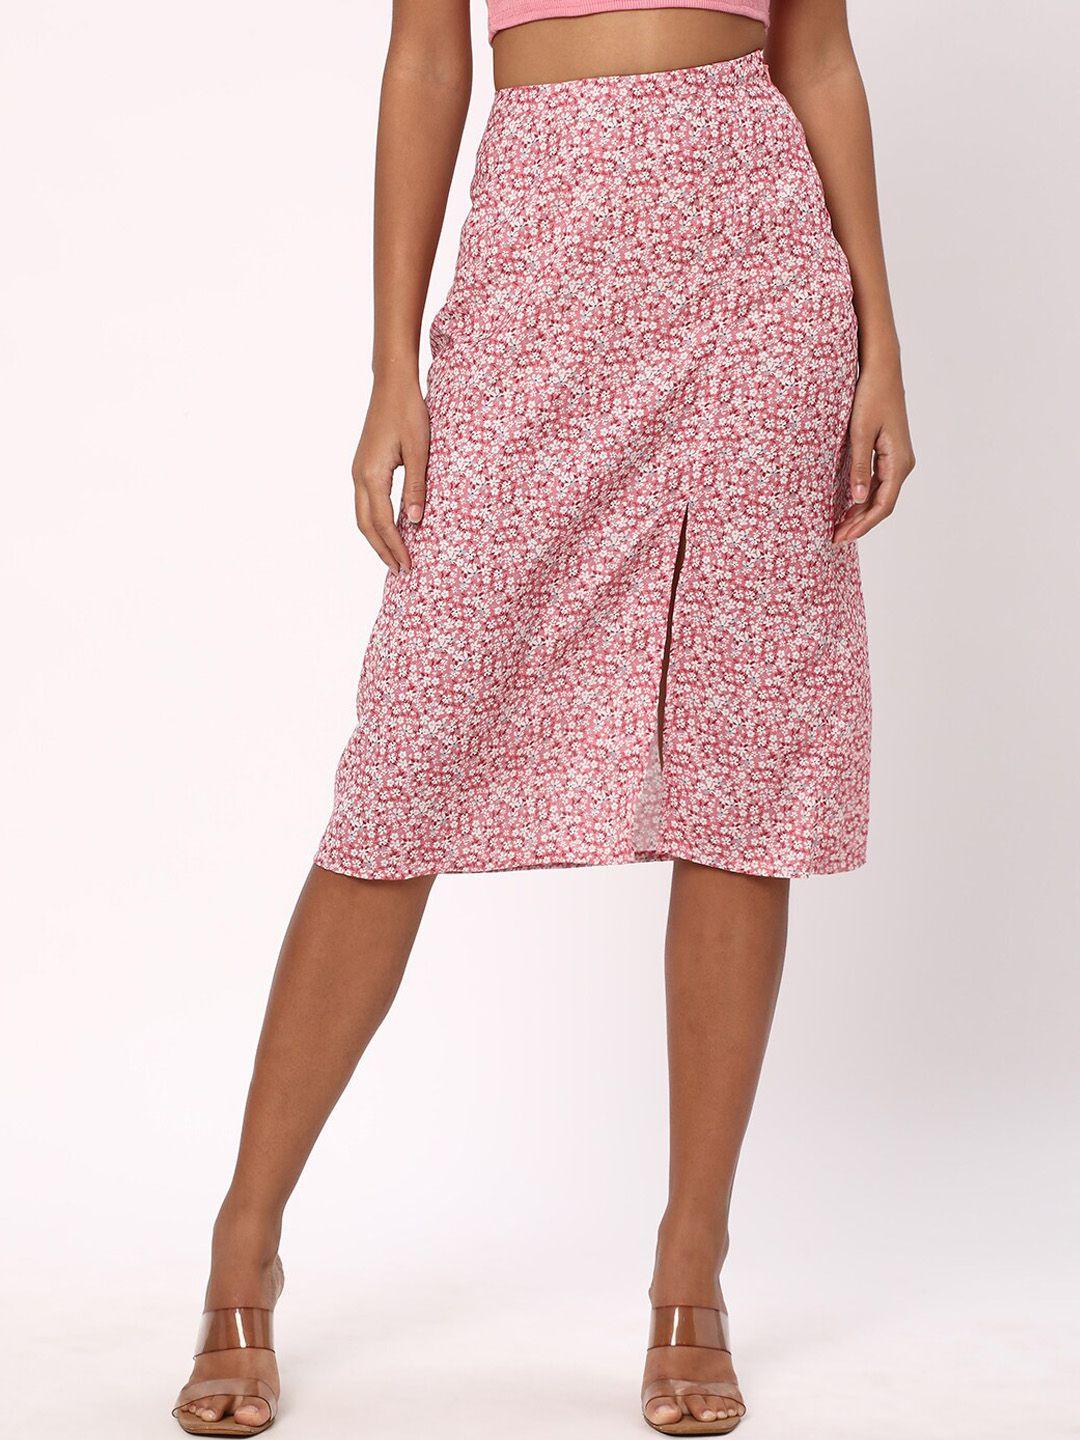 r&b floral printed a-line skirt